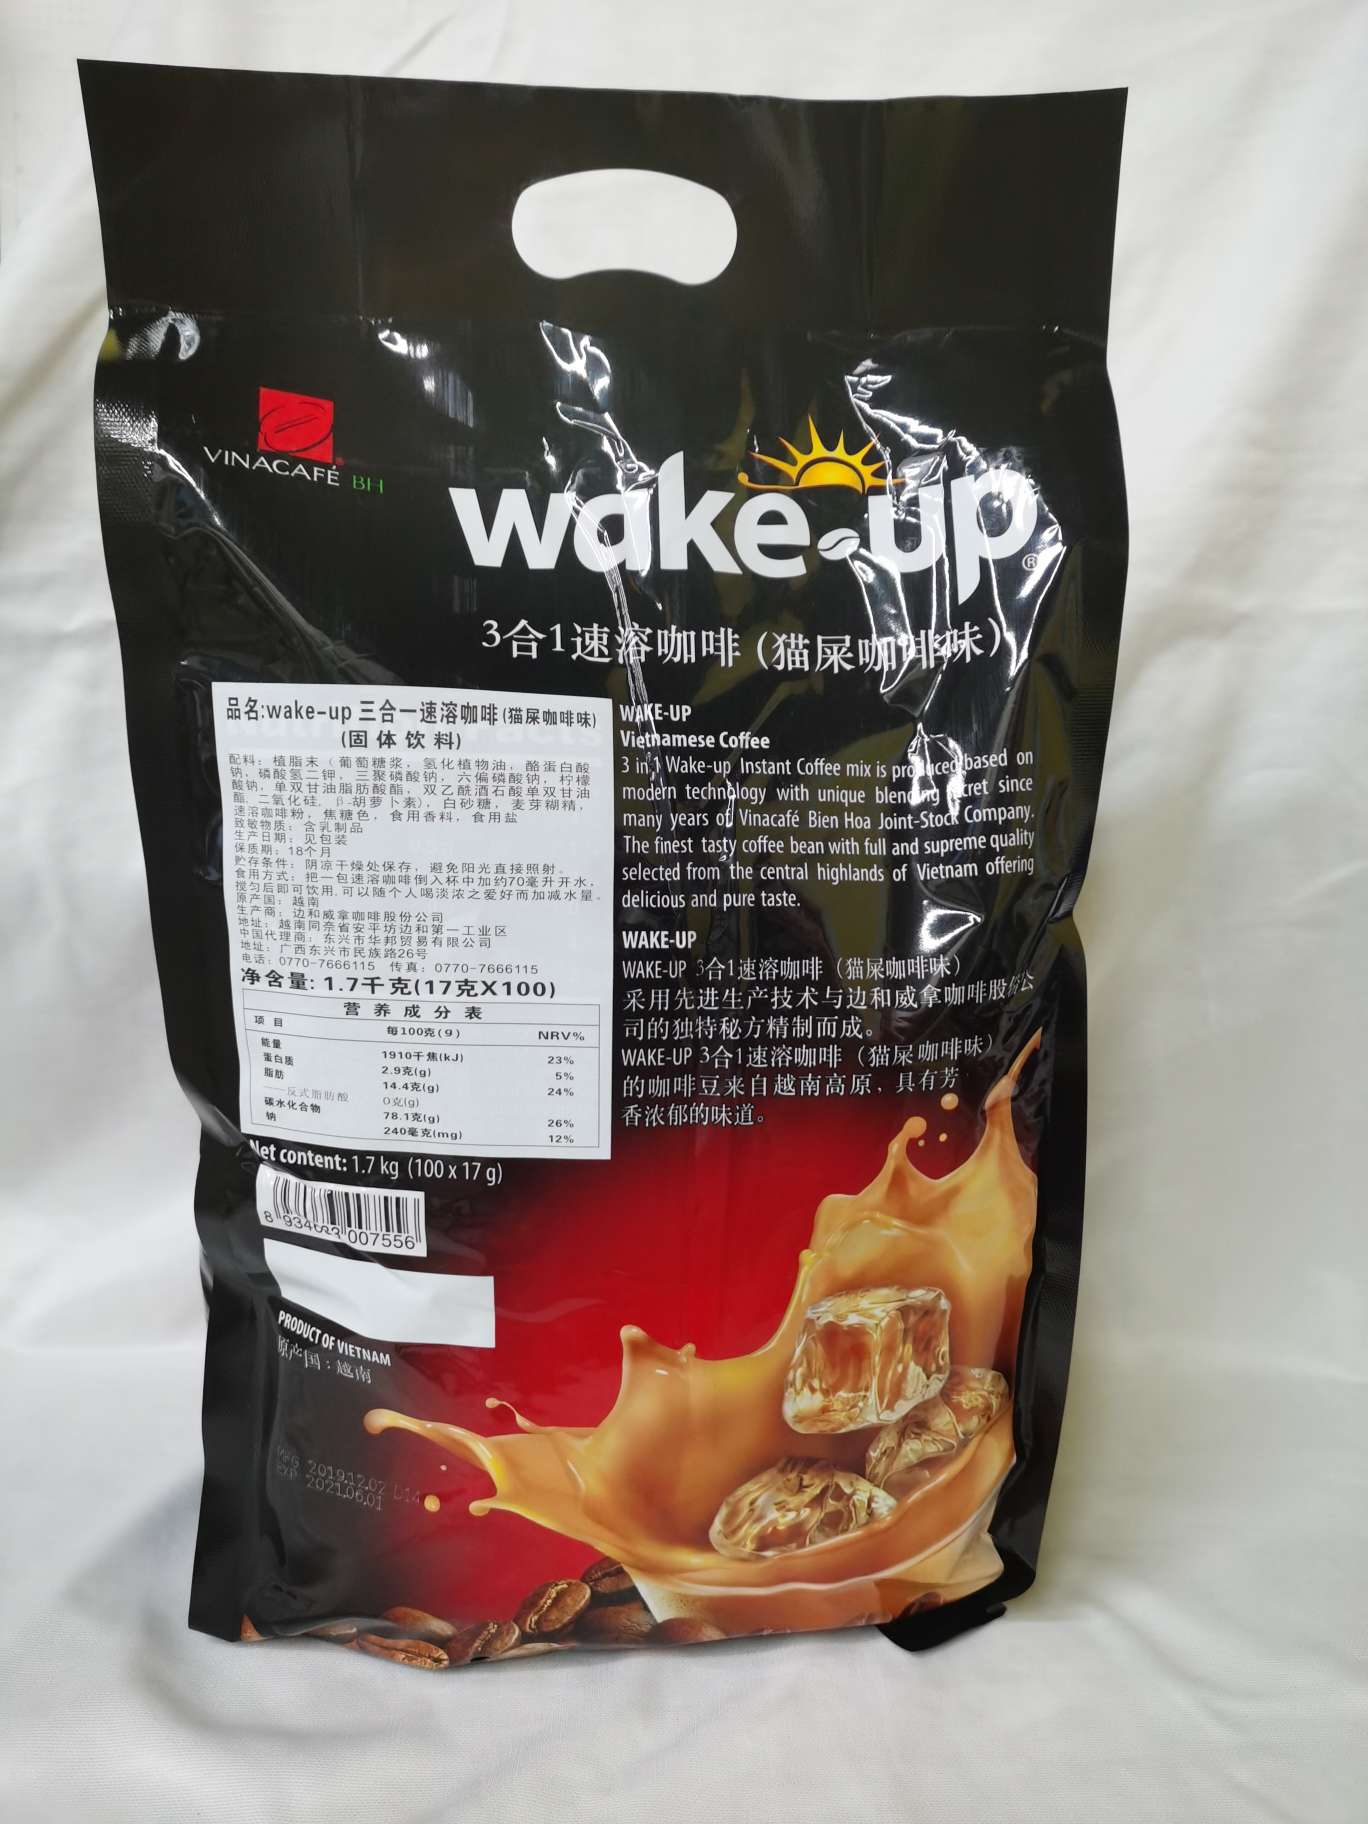 Wake-up 3合1速订溶咖啡（猫屎咖啡味）产品图